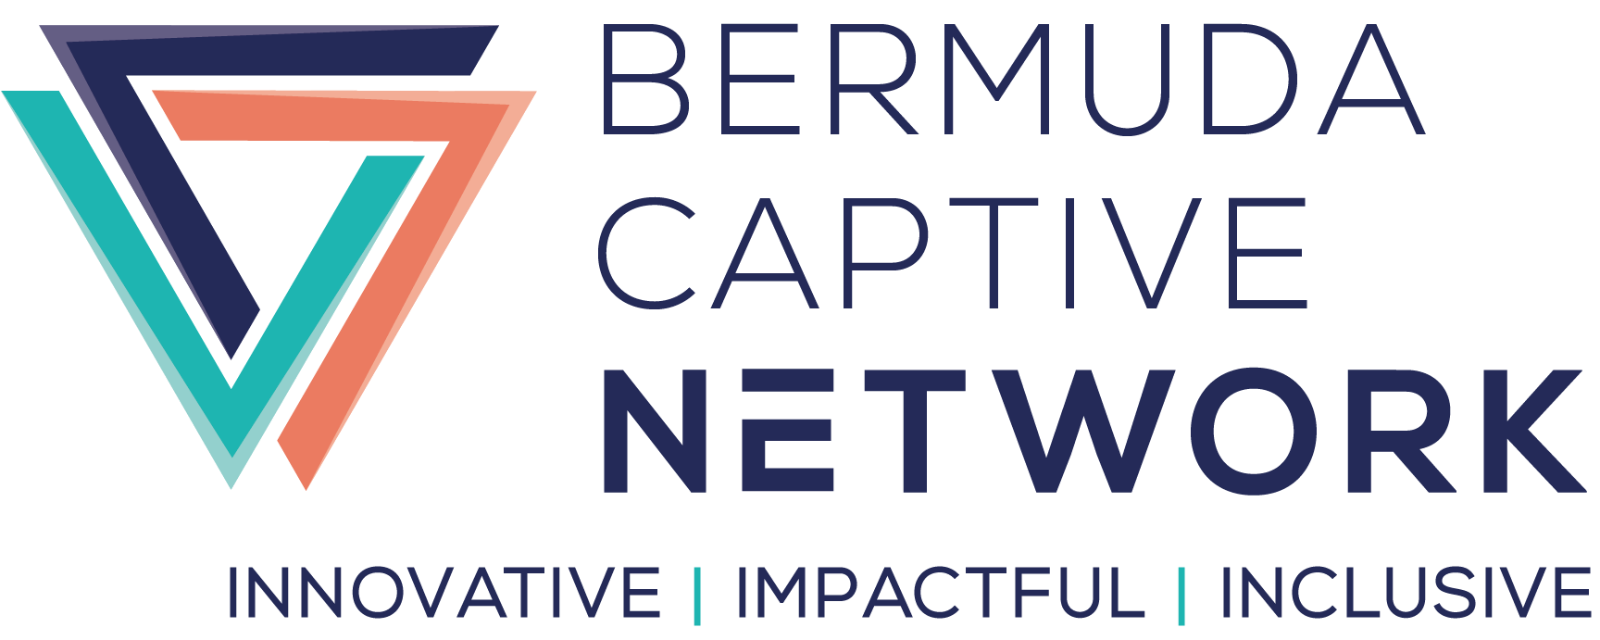 Bermuda%20Captive%20Network%20Straplined.png